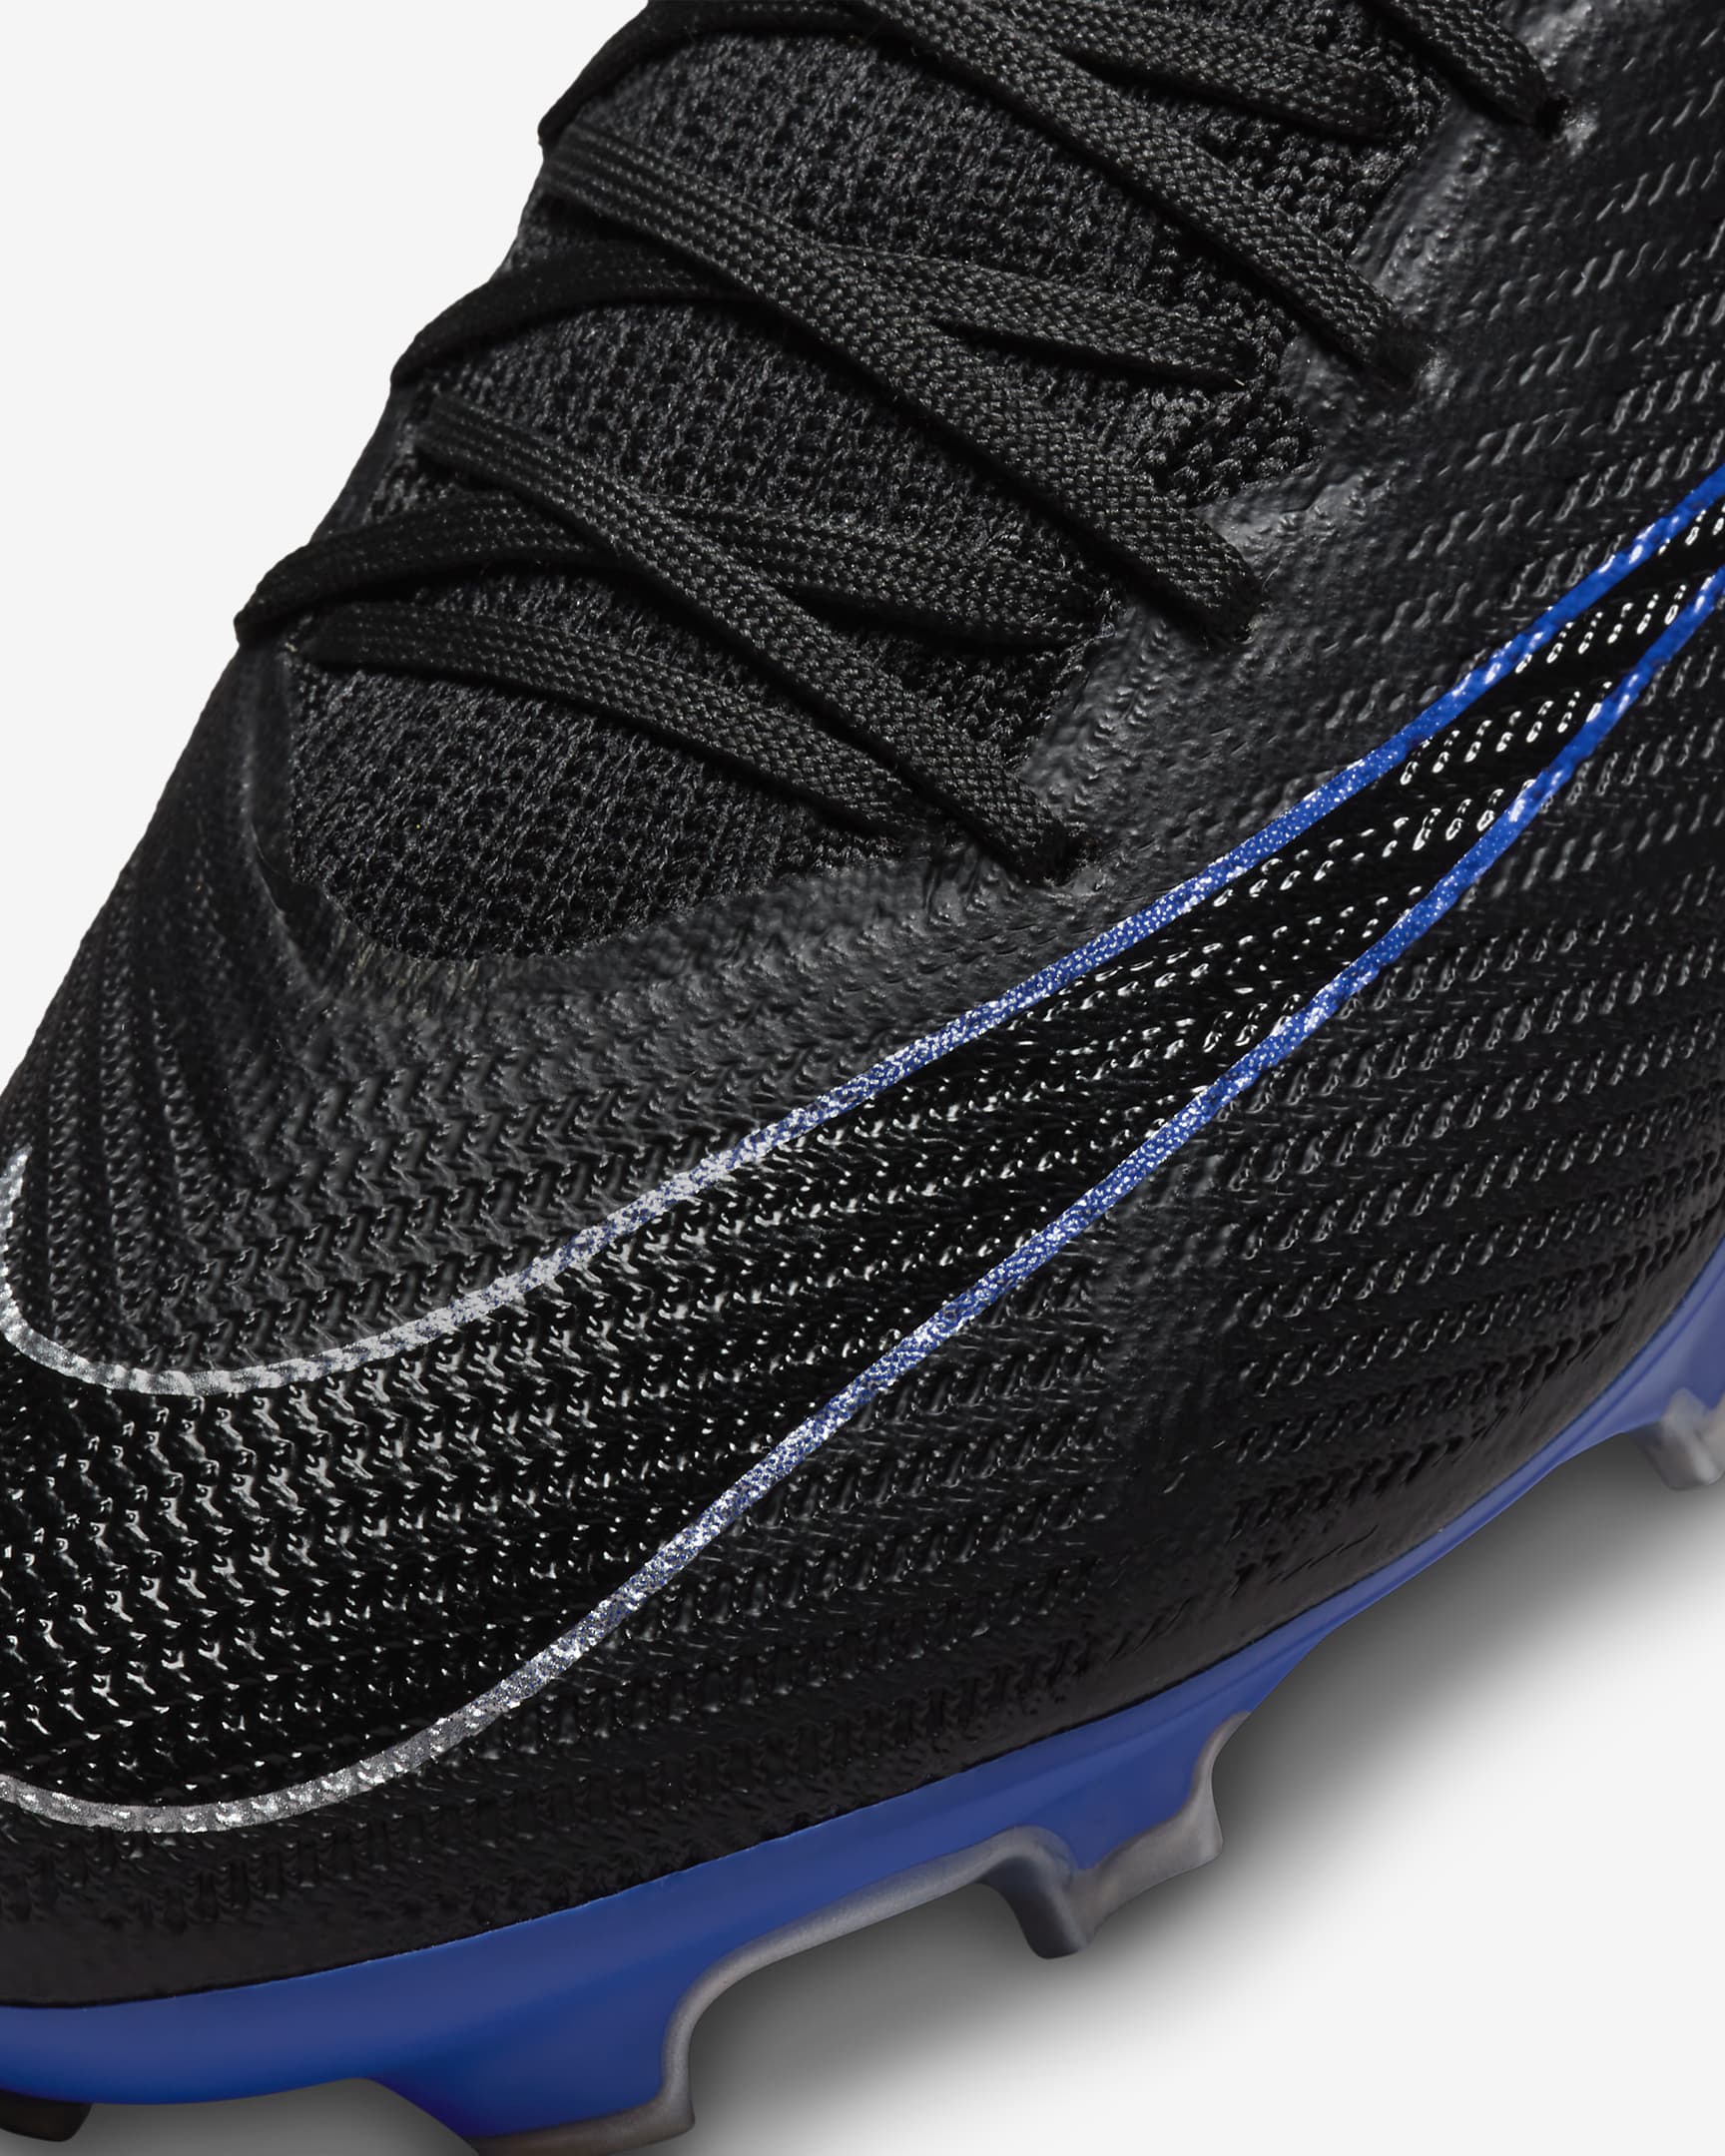 Nike Mercurial Vapor 15 Pro Firm-Ground Low-Top Soccer Cleats - Black/Hyper Royal/Chrome